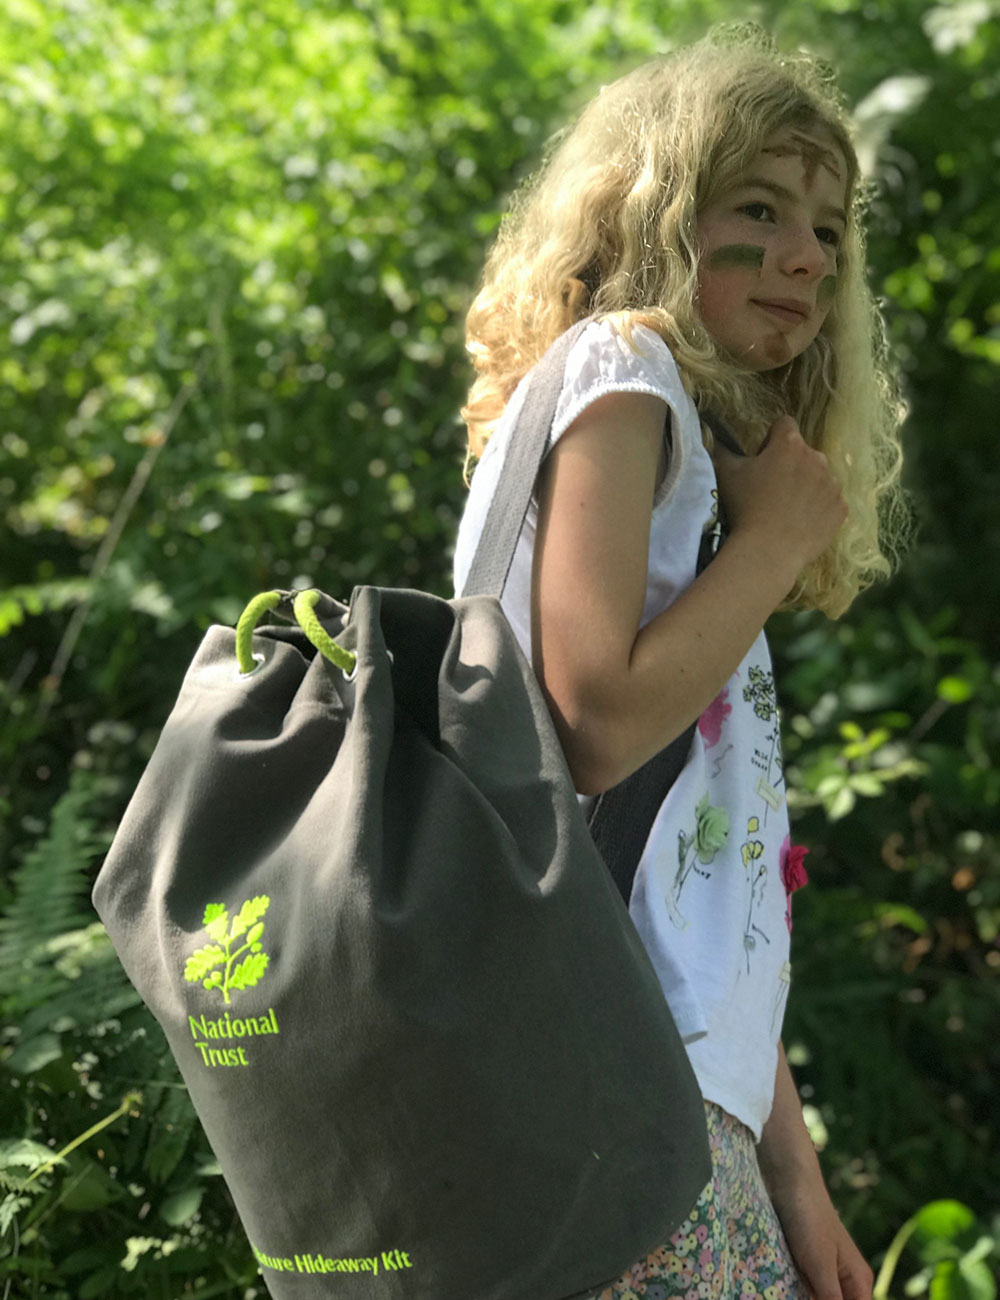 Young girl carrying Den Kit green bag